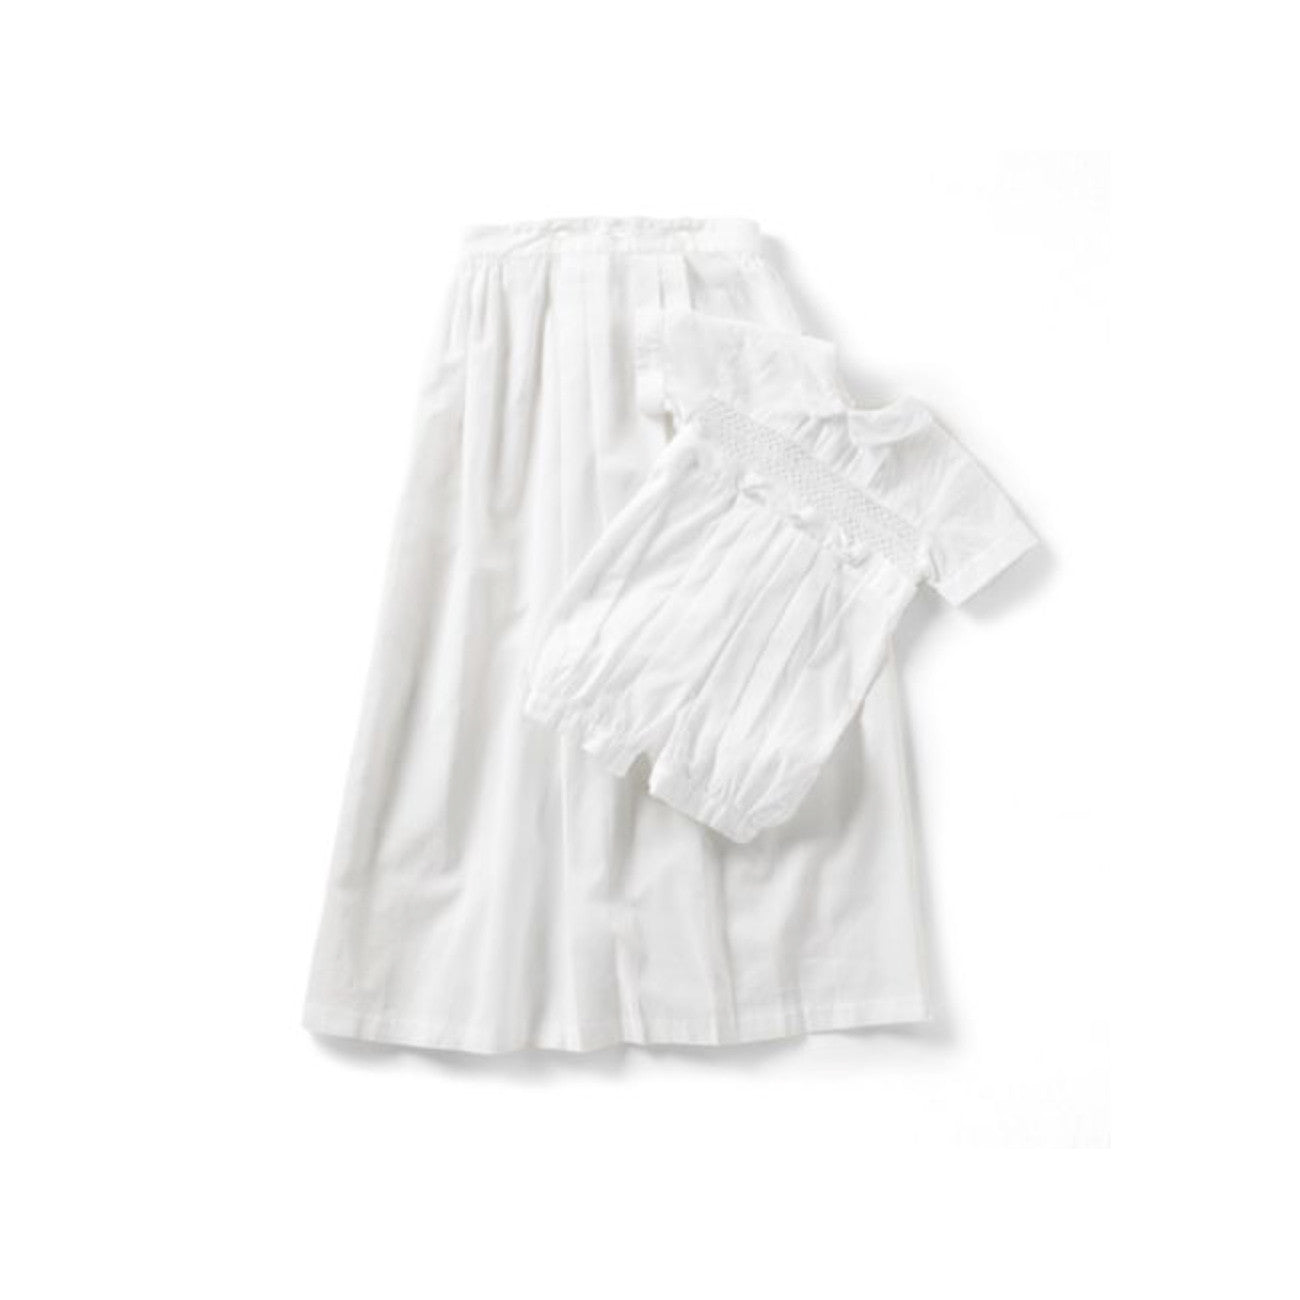 Auraluz Christening Gown/Slip/Hat...White with white lace/ribbon, scal –  AURALUZ